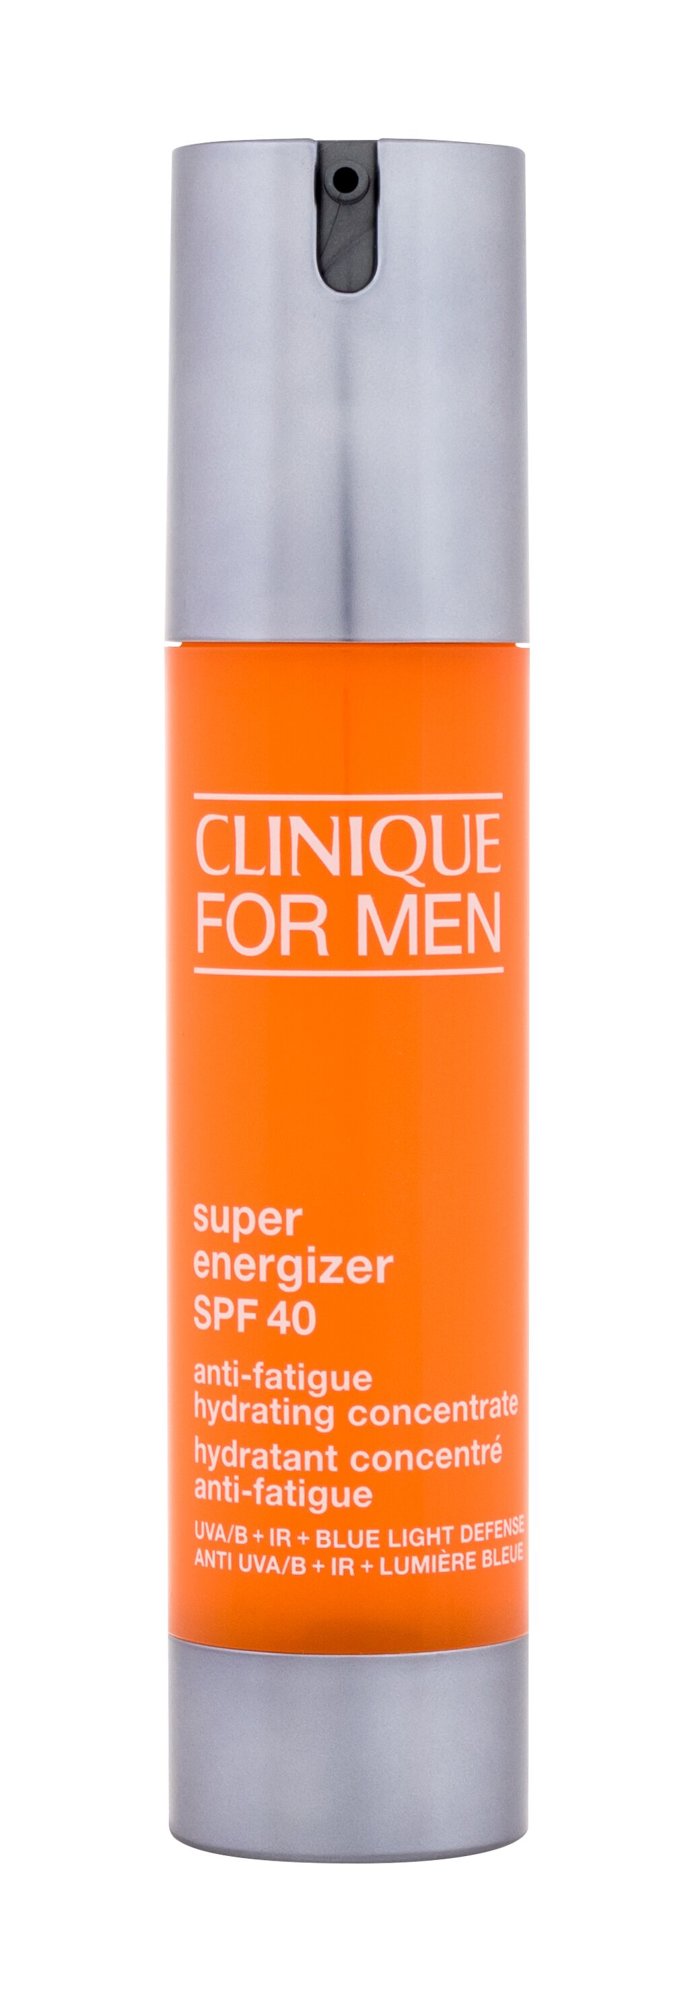 Clinique For Men Super Energizer veido gelis